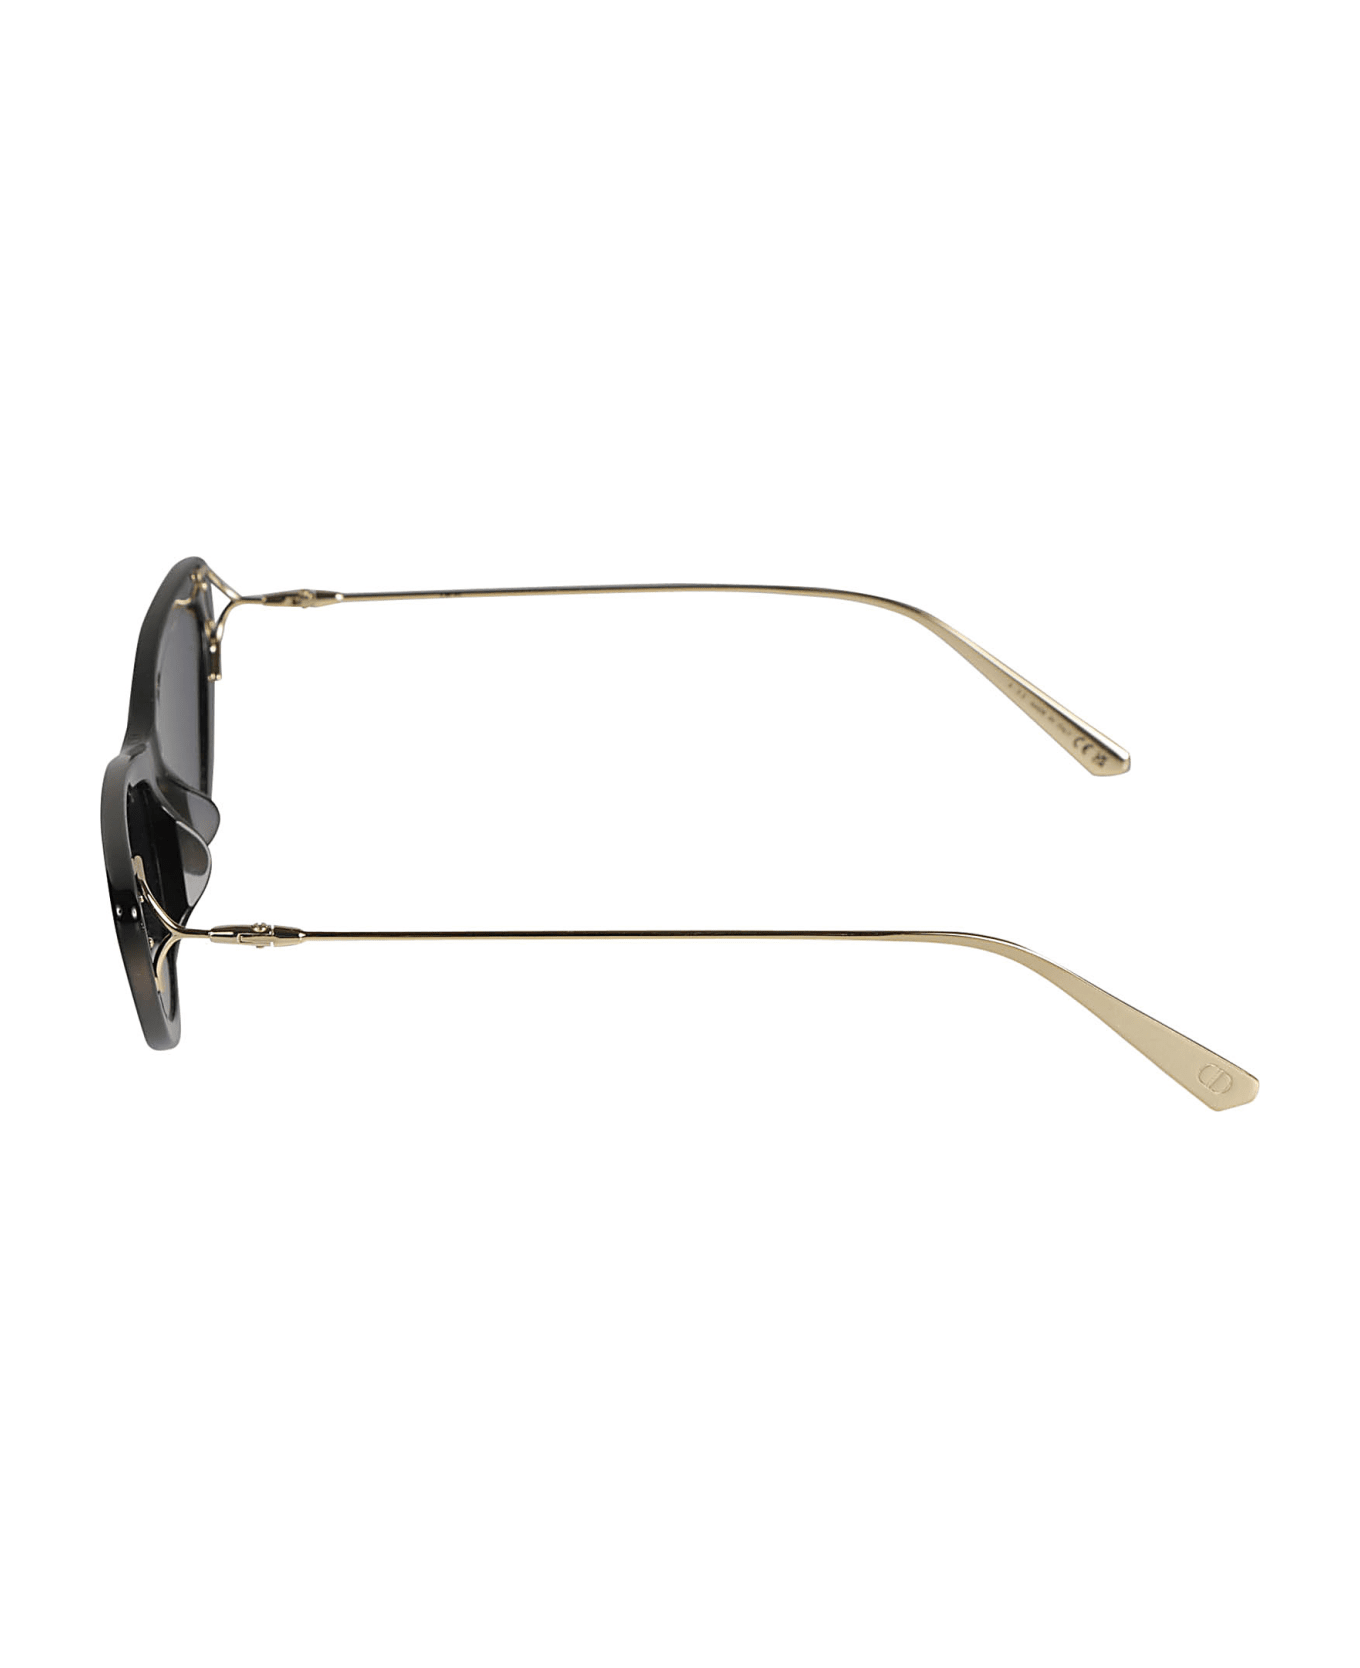 Dior Eyewear Missdior Sunglasses - 12b0 サングラス